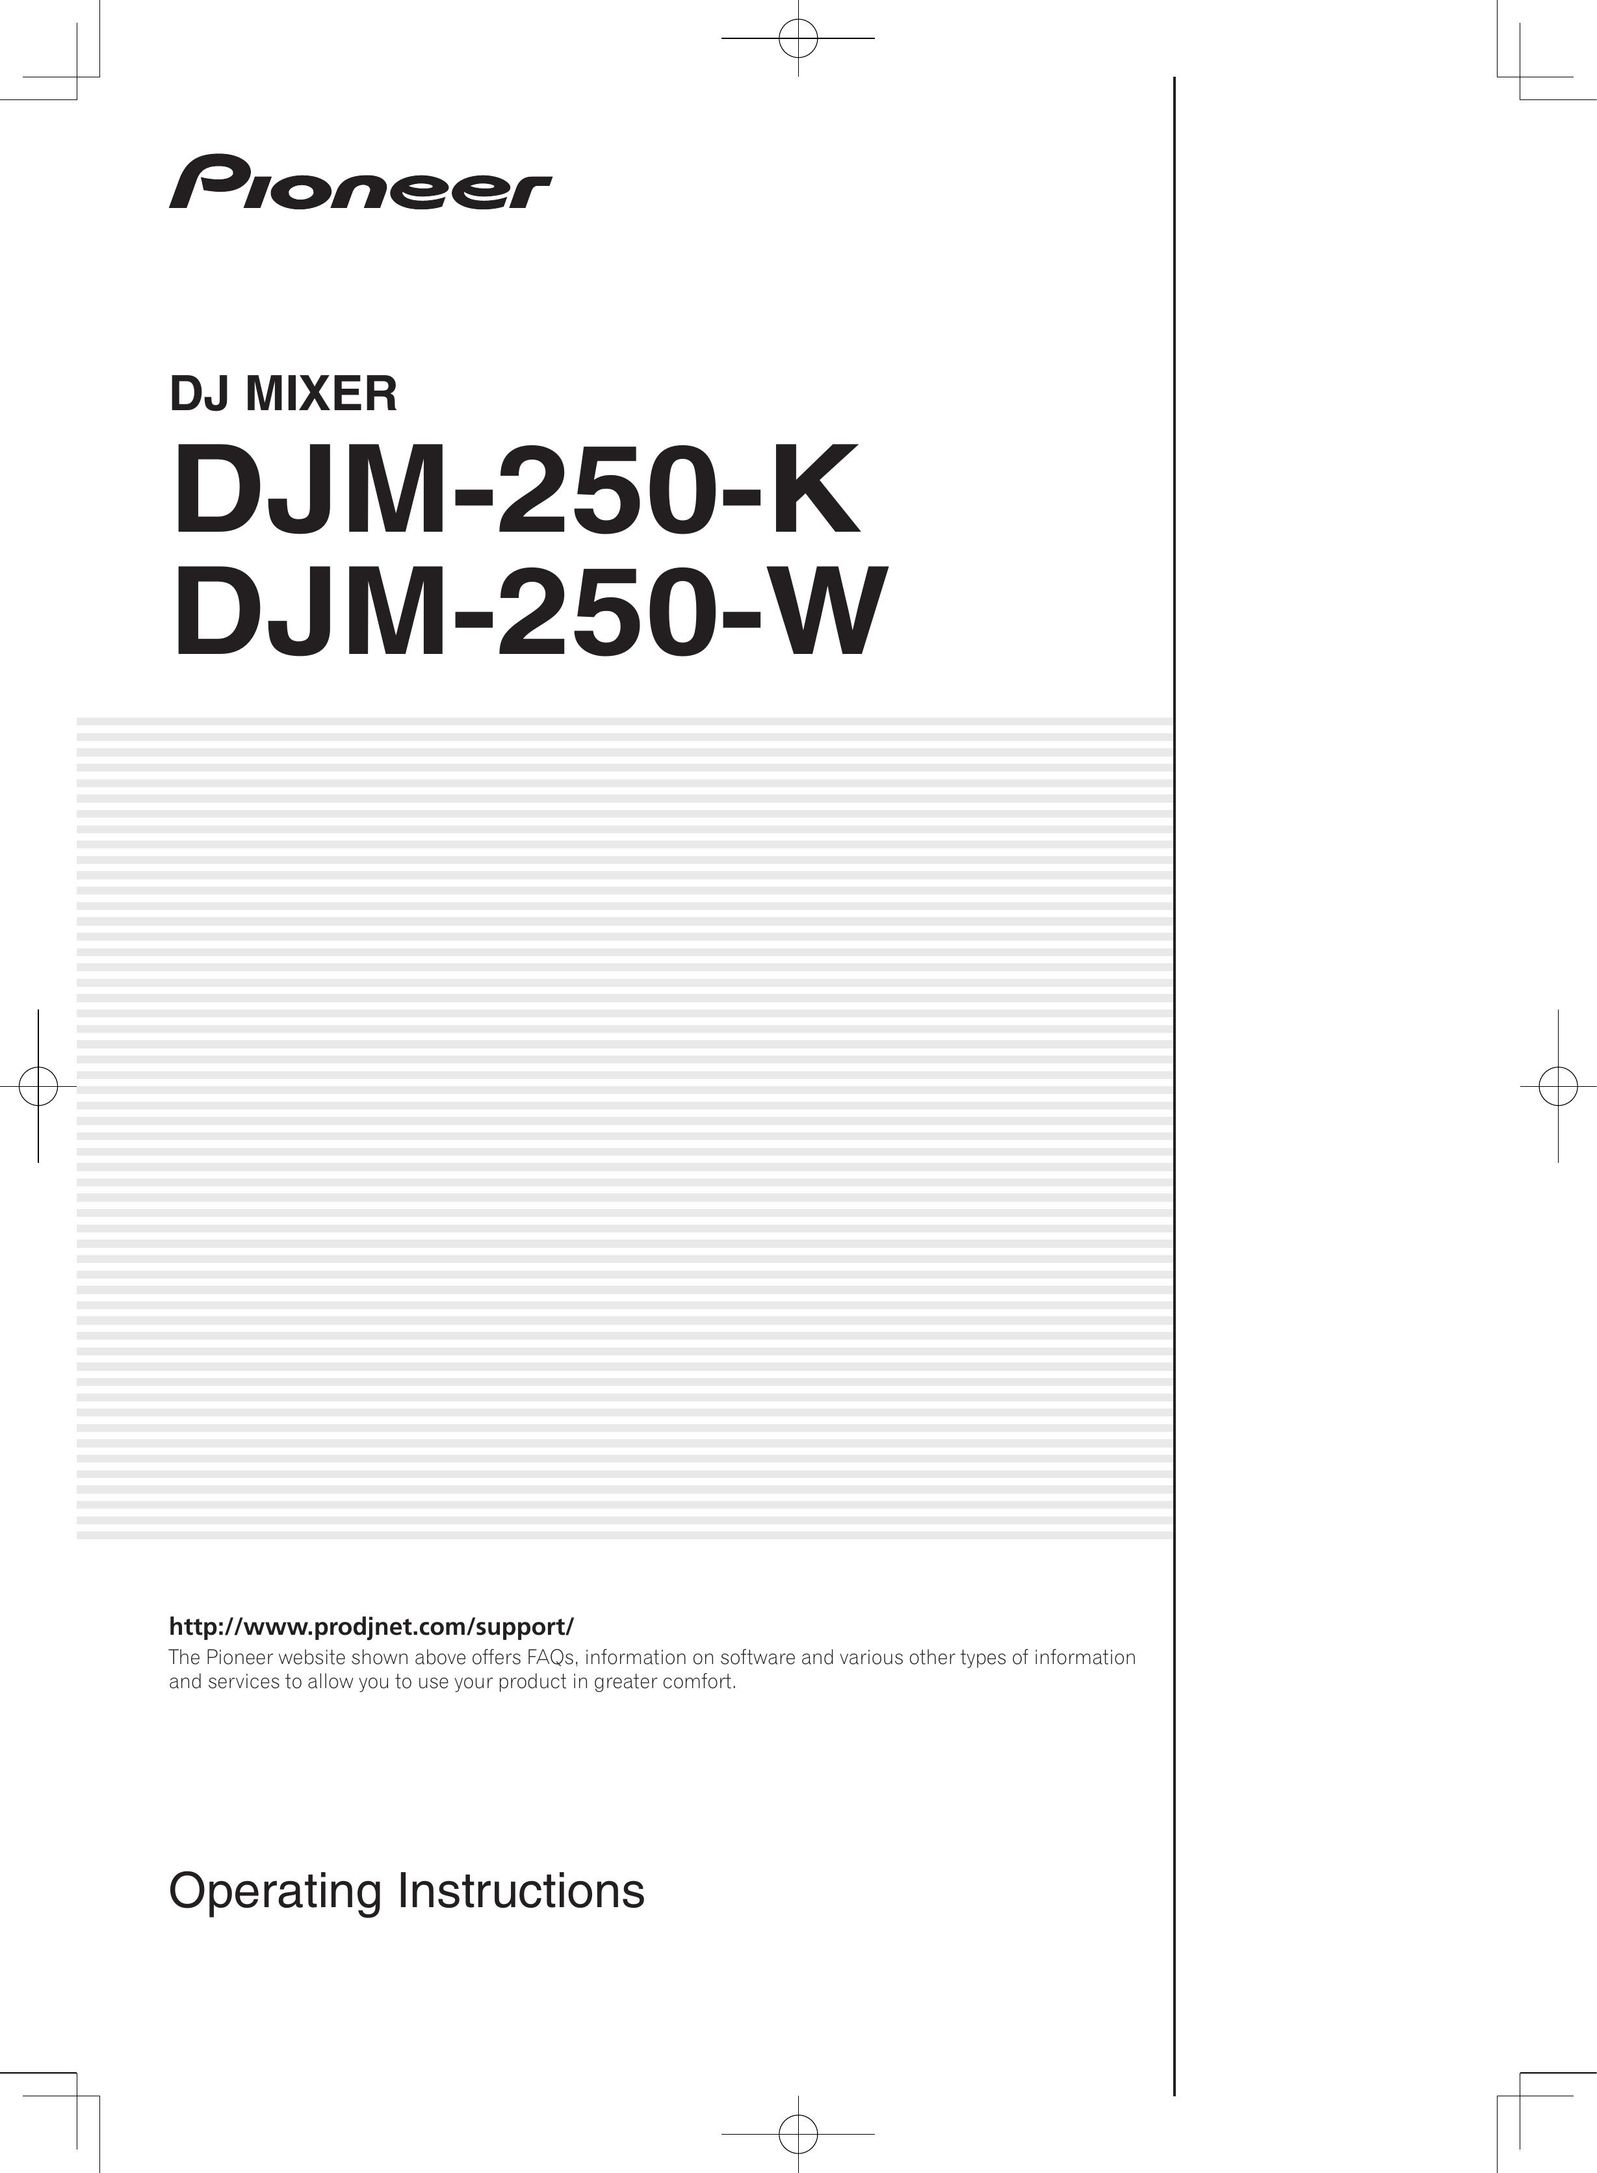 Pioneer DJM-250-W Musical Table User Manual